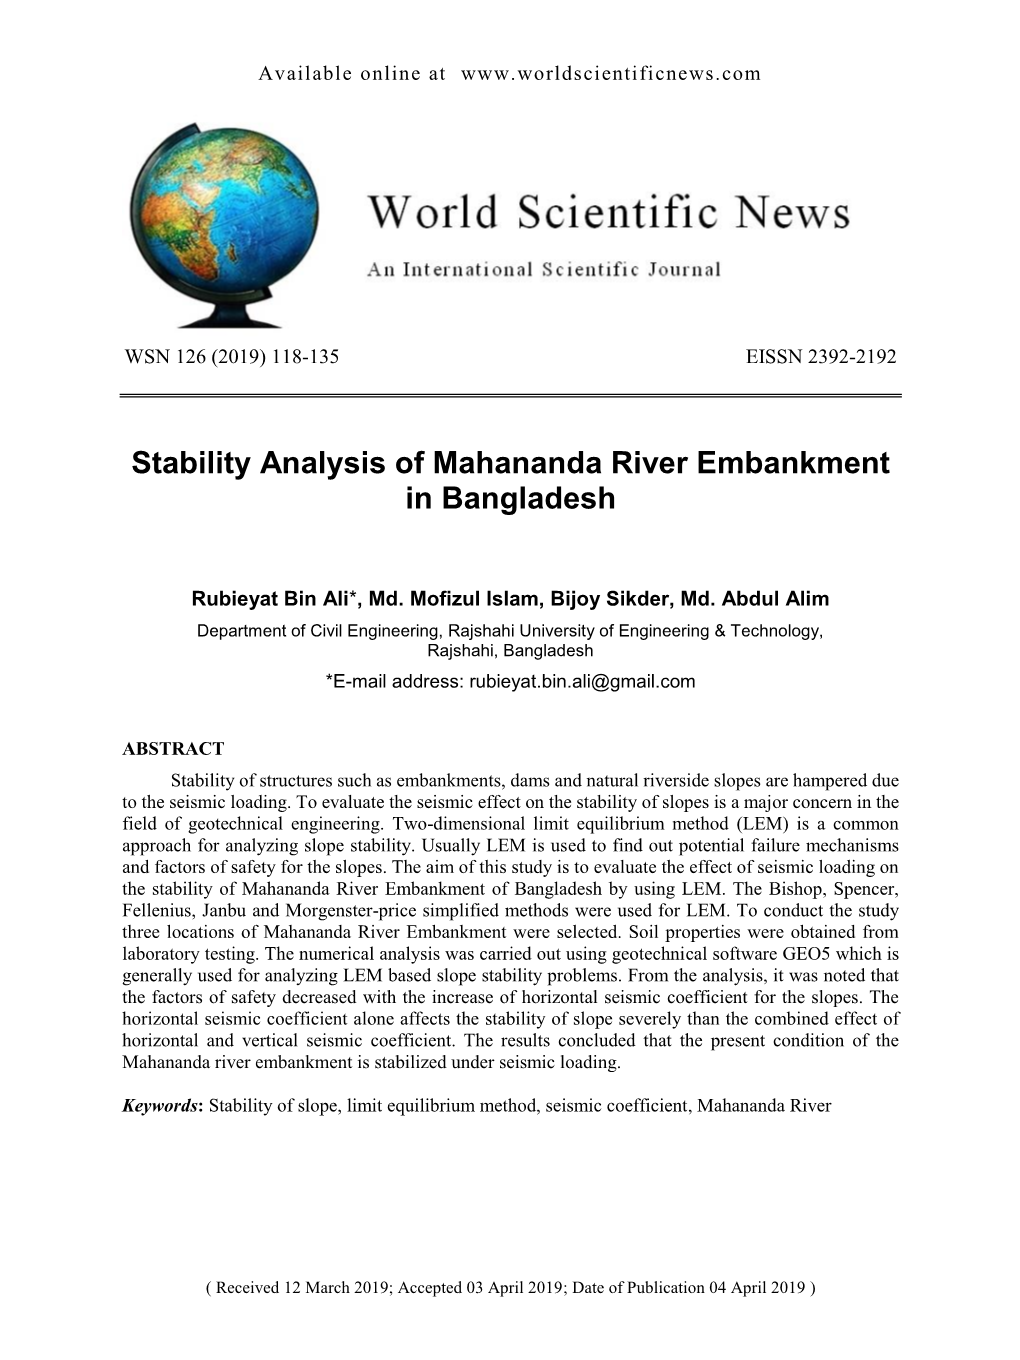 Stability Analysis of Mahananda River Embankment in Bangladesh